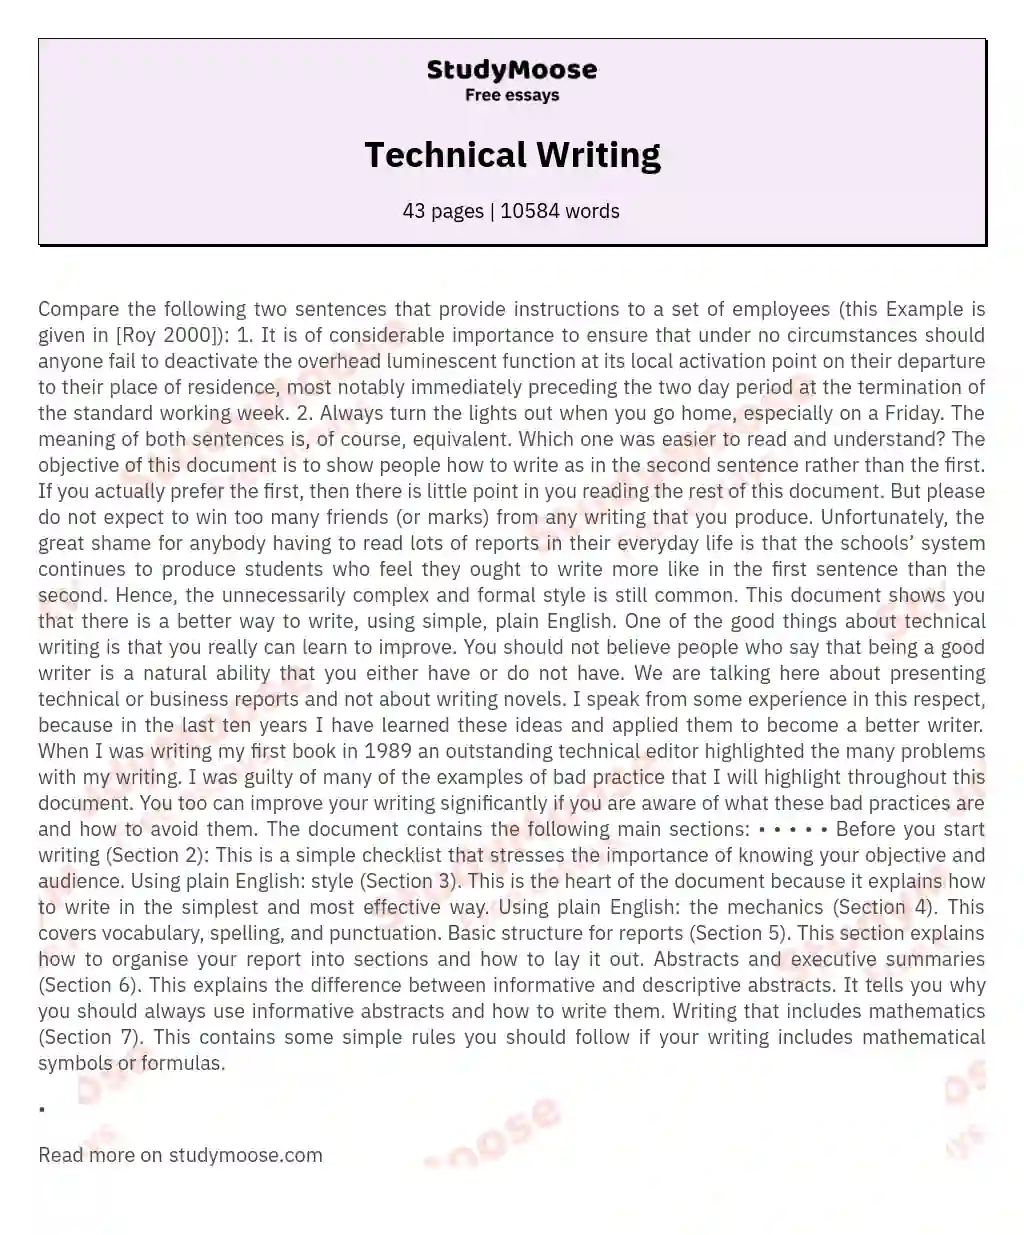 Technical Writing essay